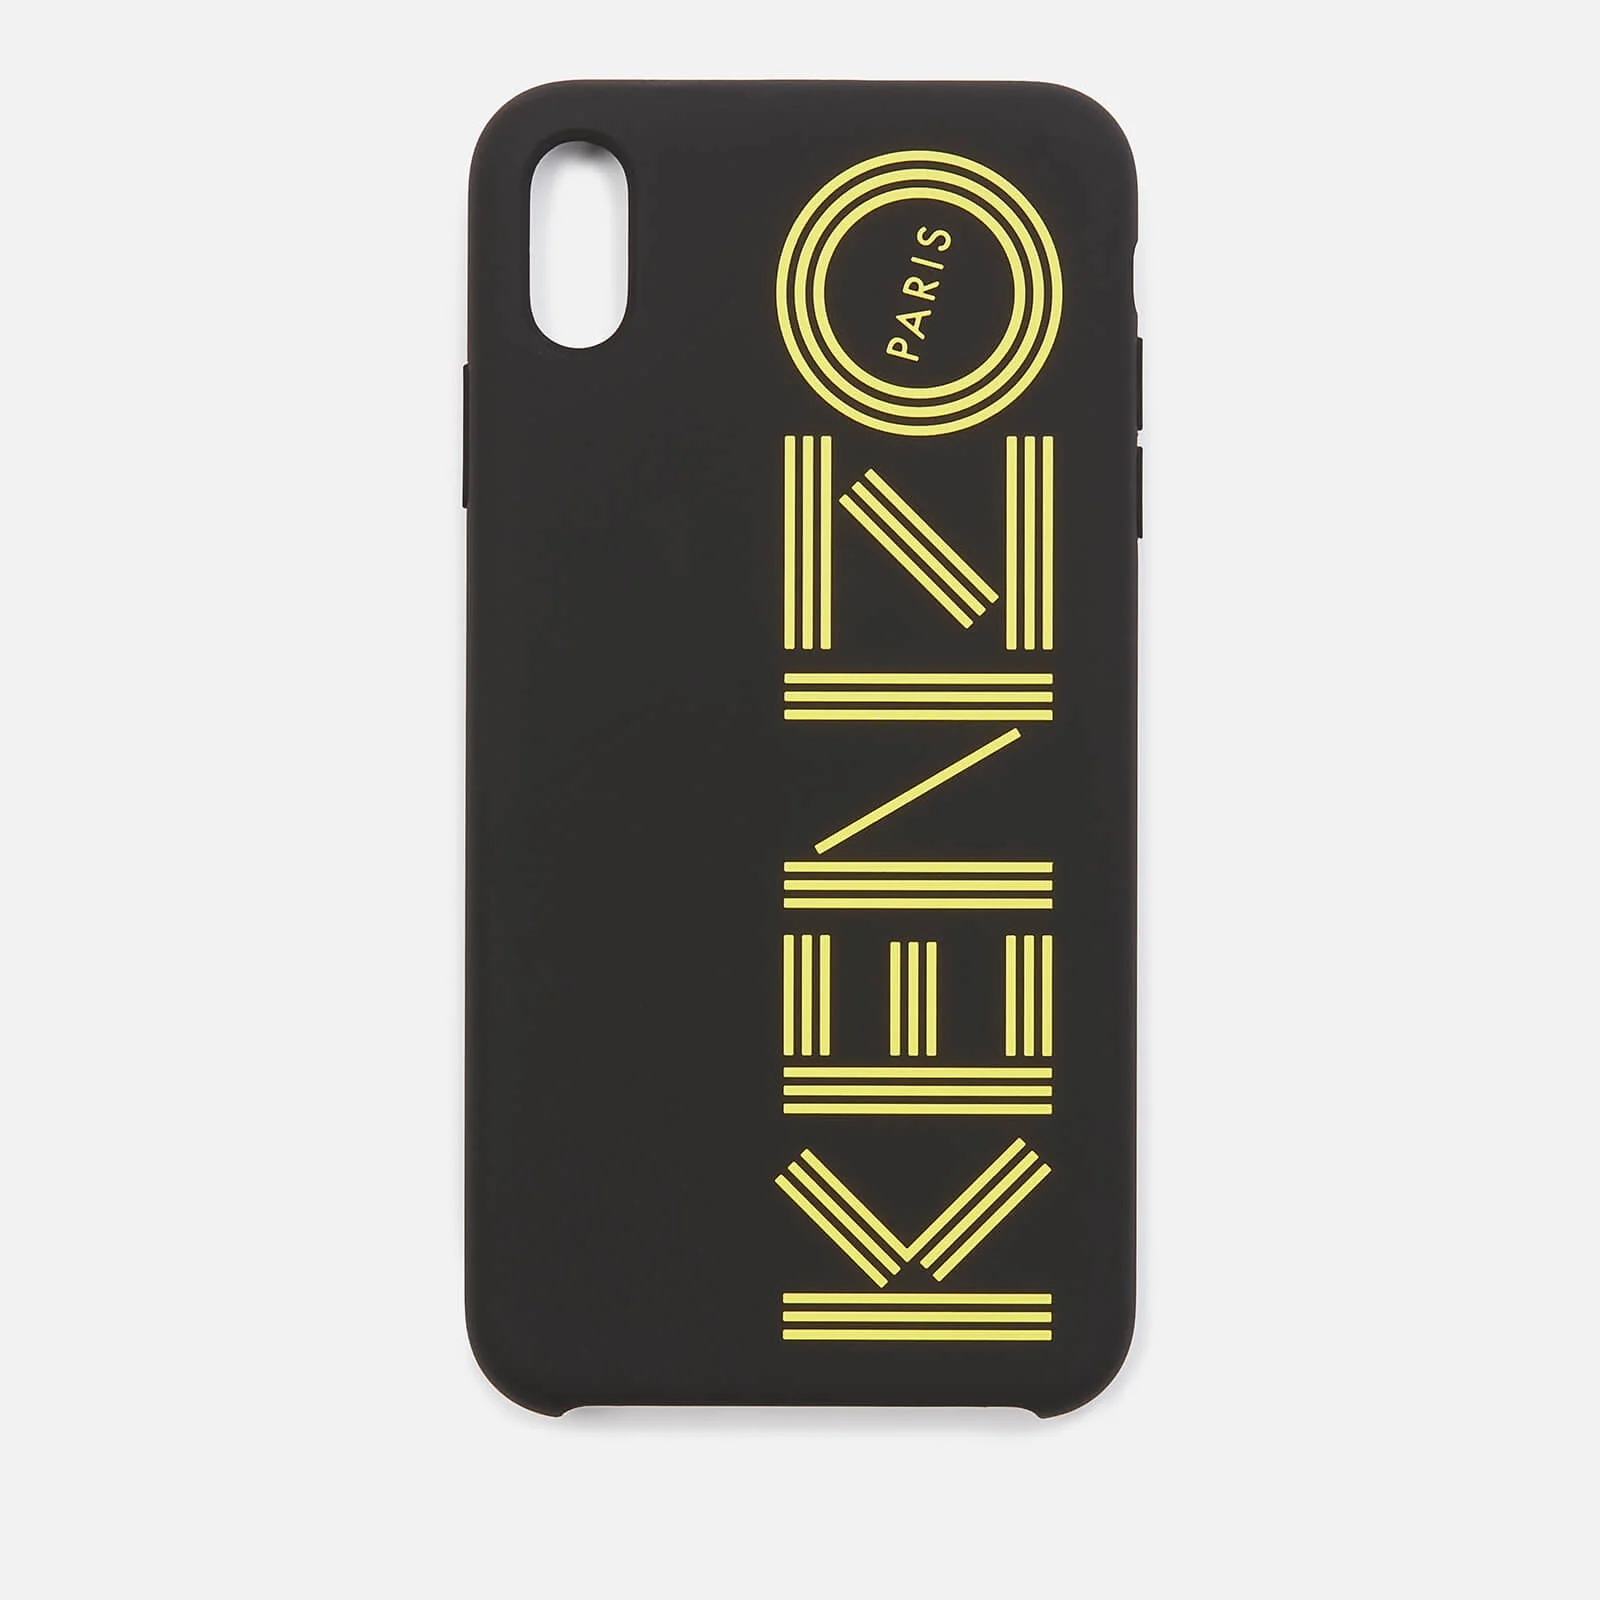 KENZO Men's Logo iPhone X Max Case - Black/Yellow Image 1